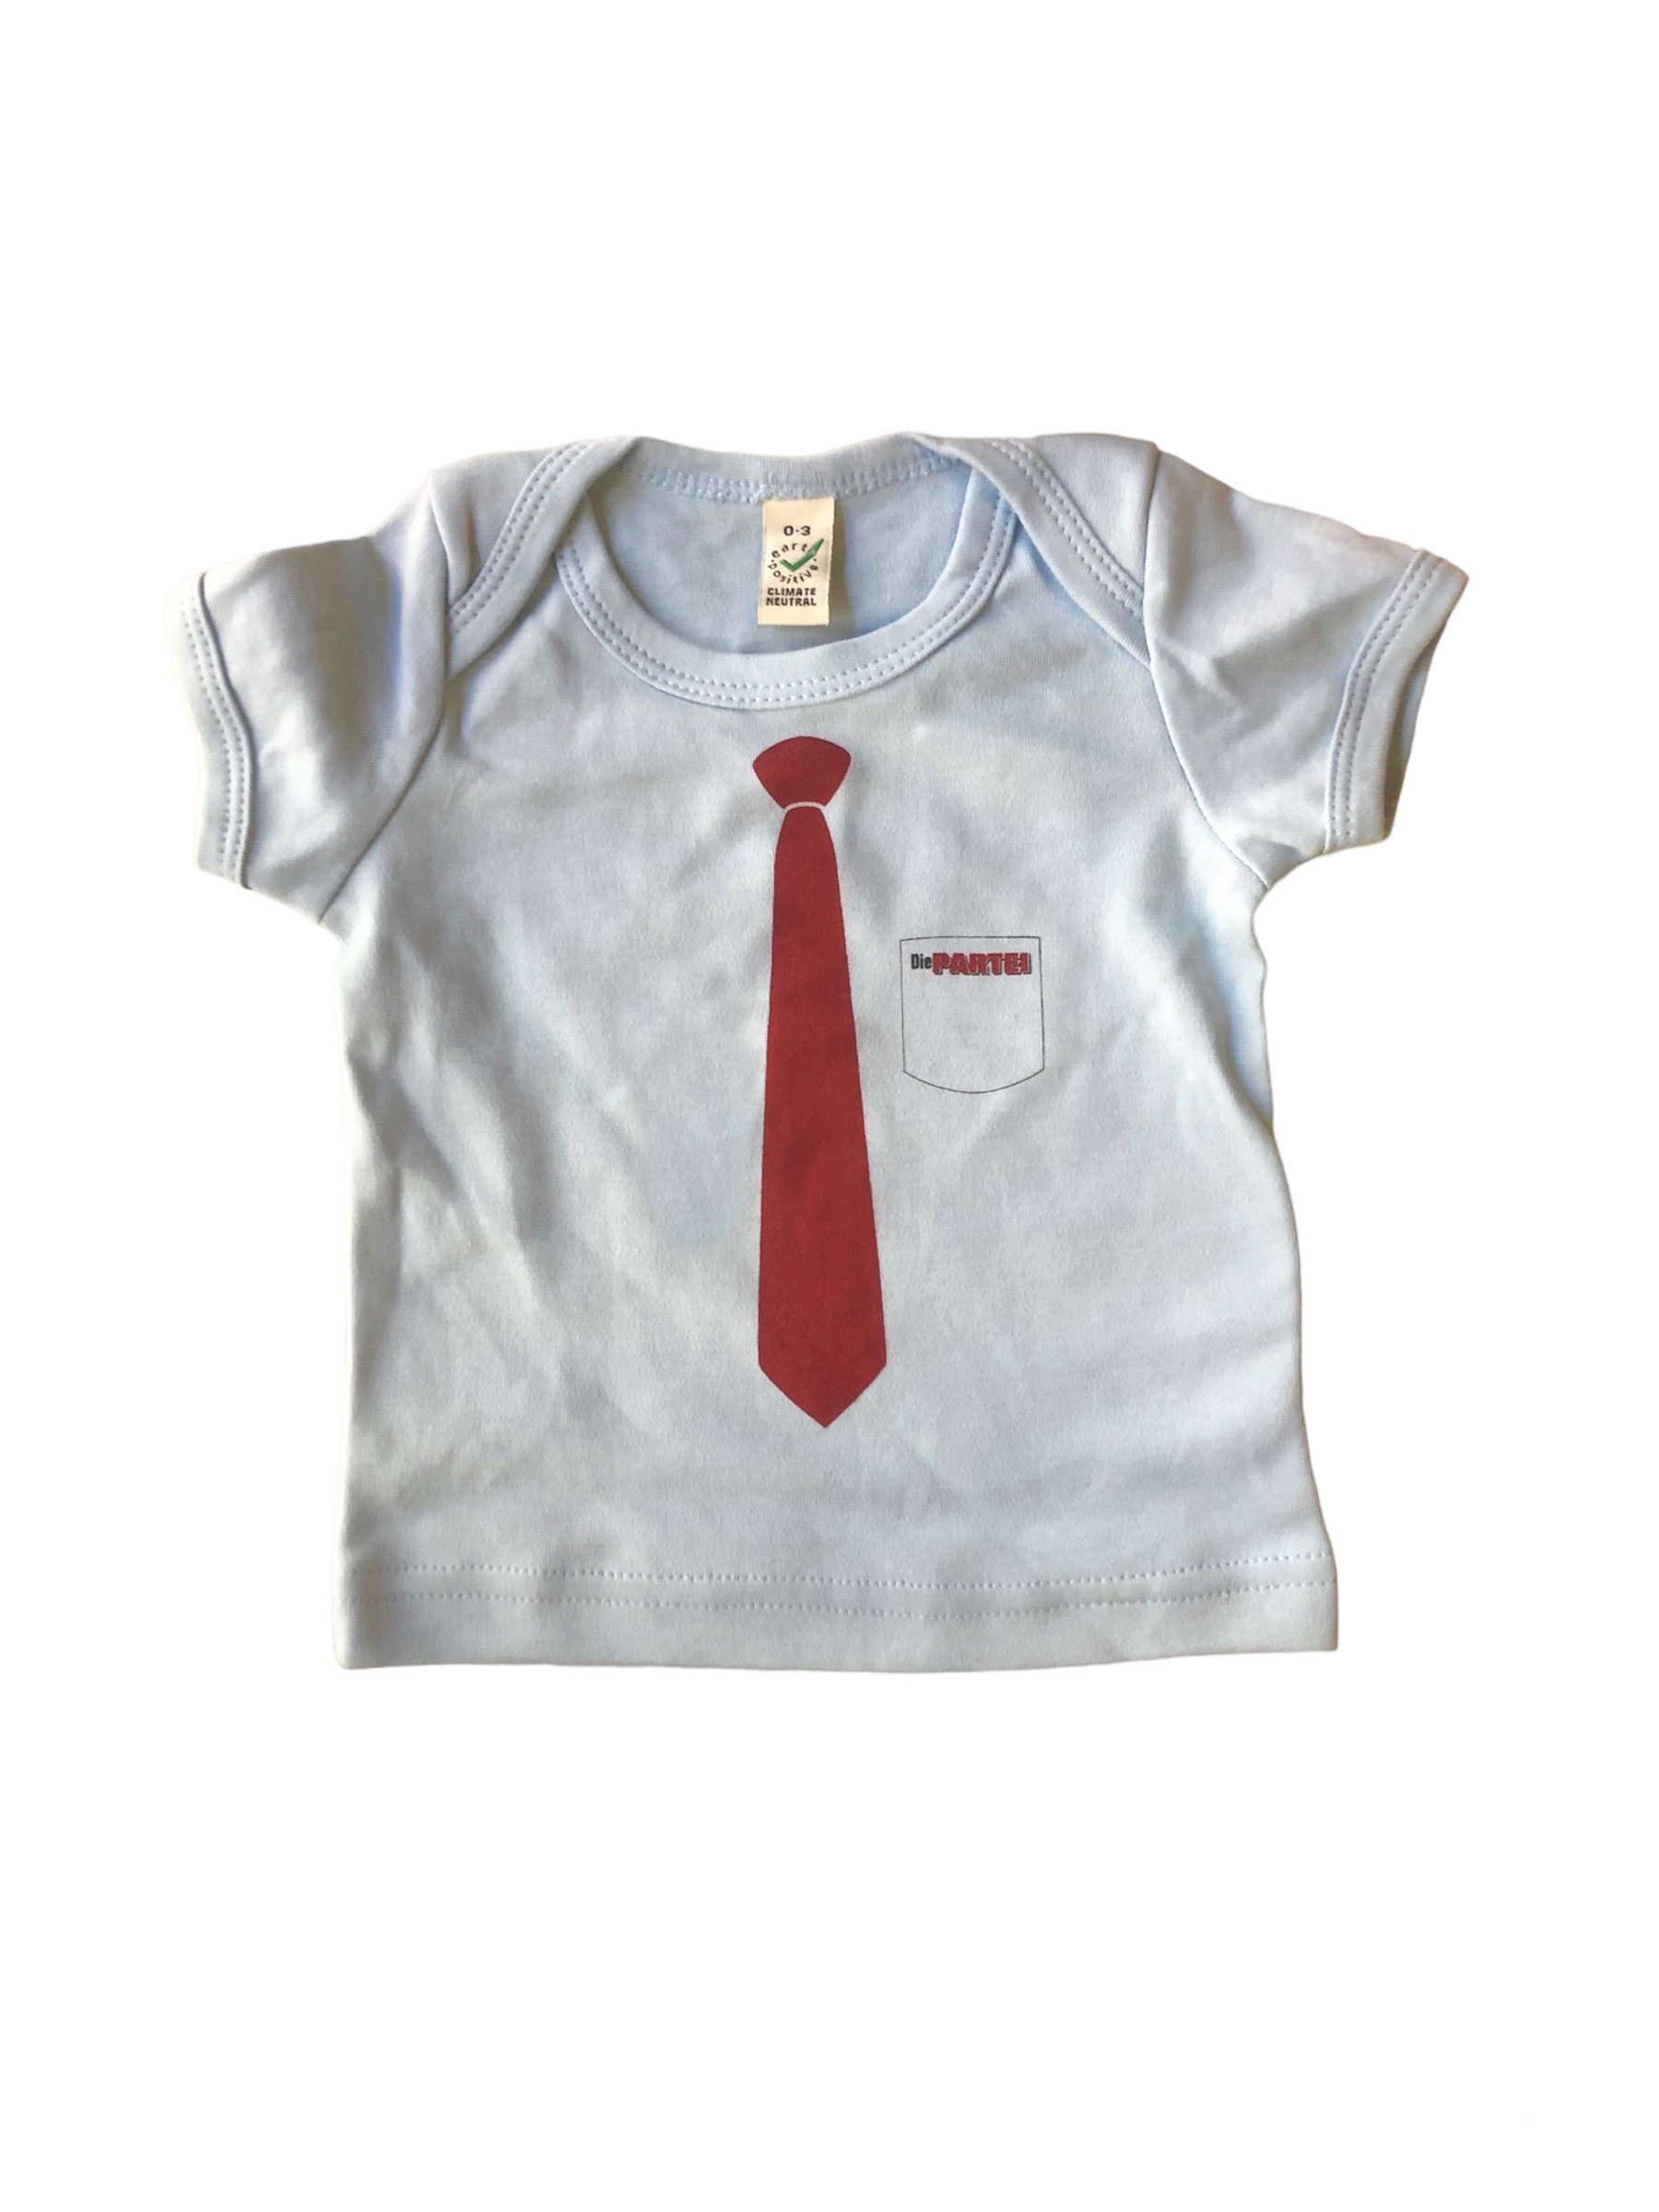 Partei Baby-Shirt: Krawatte